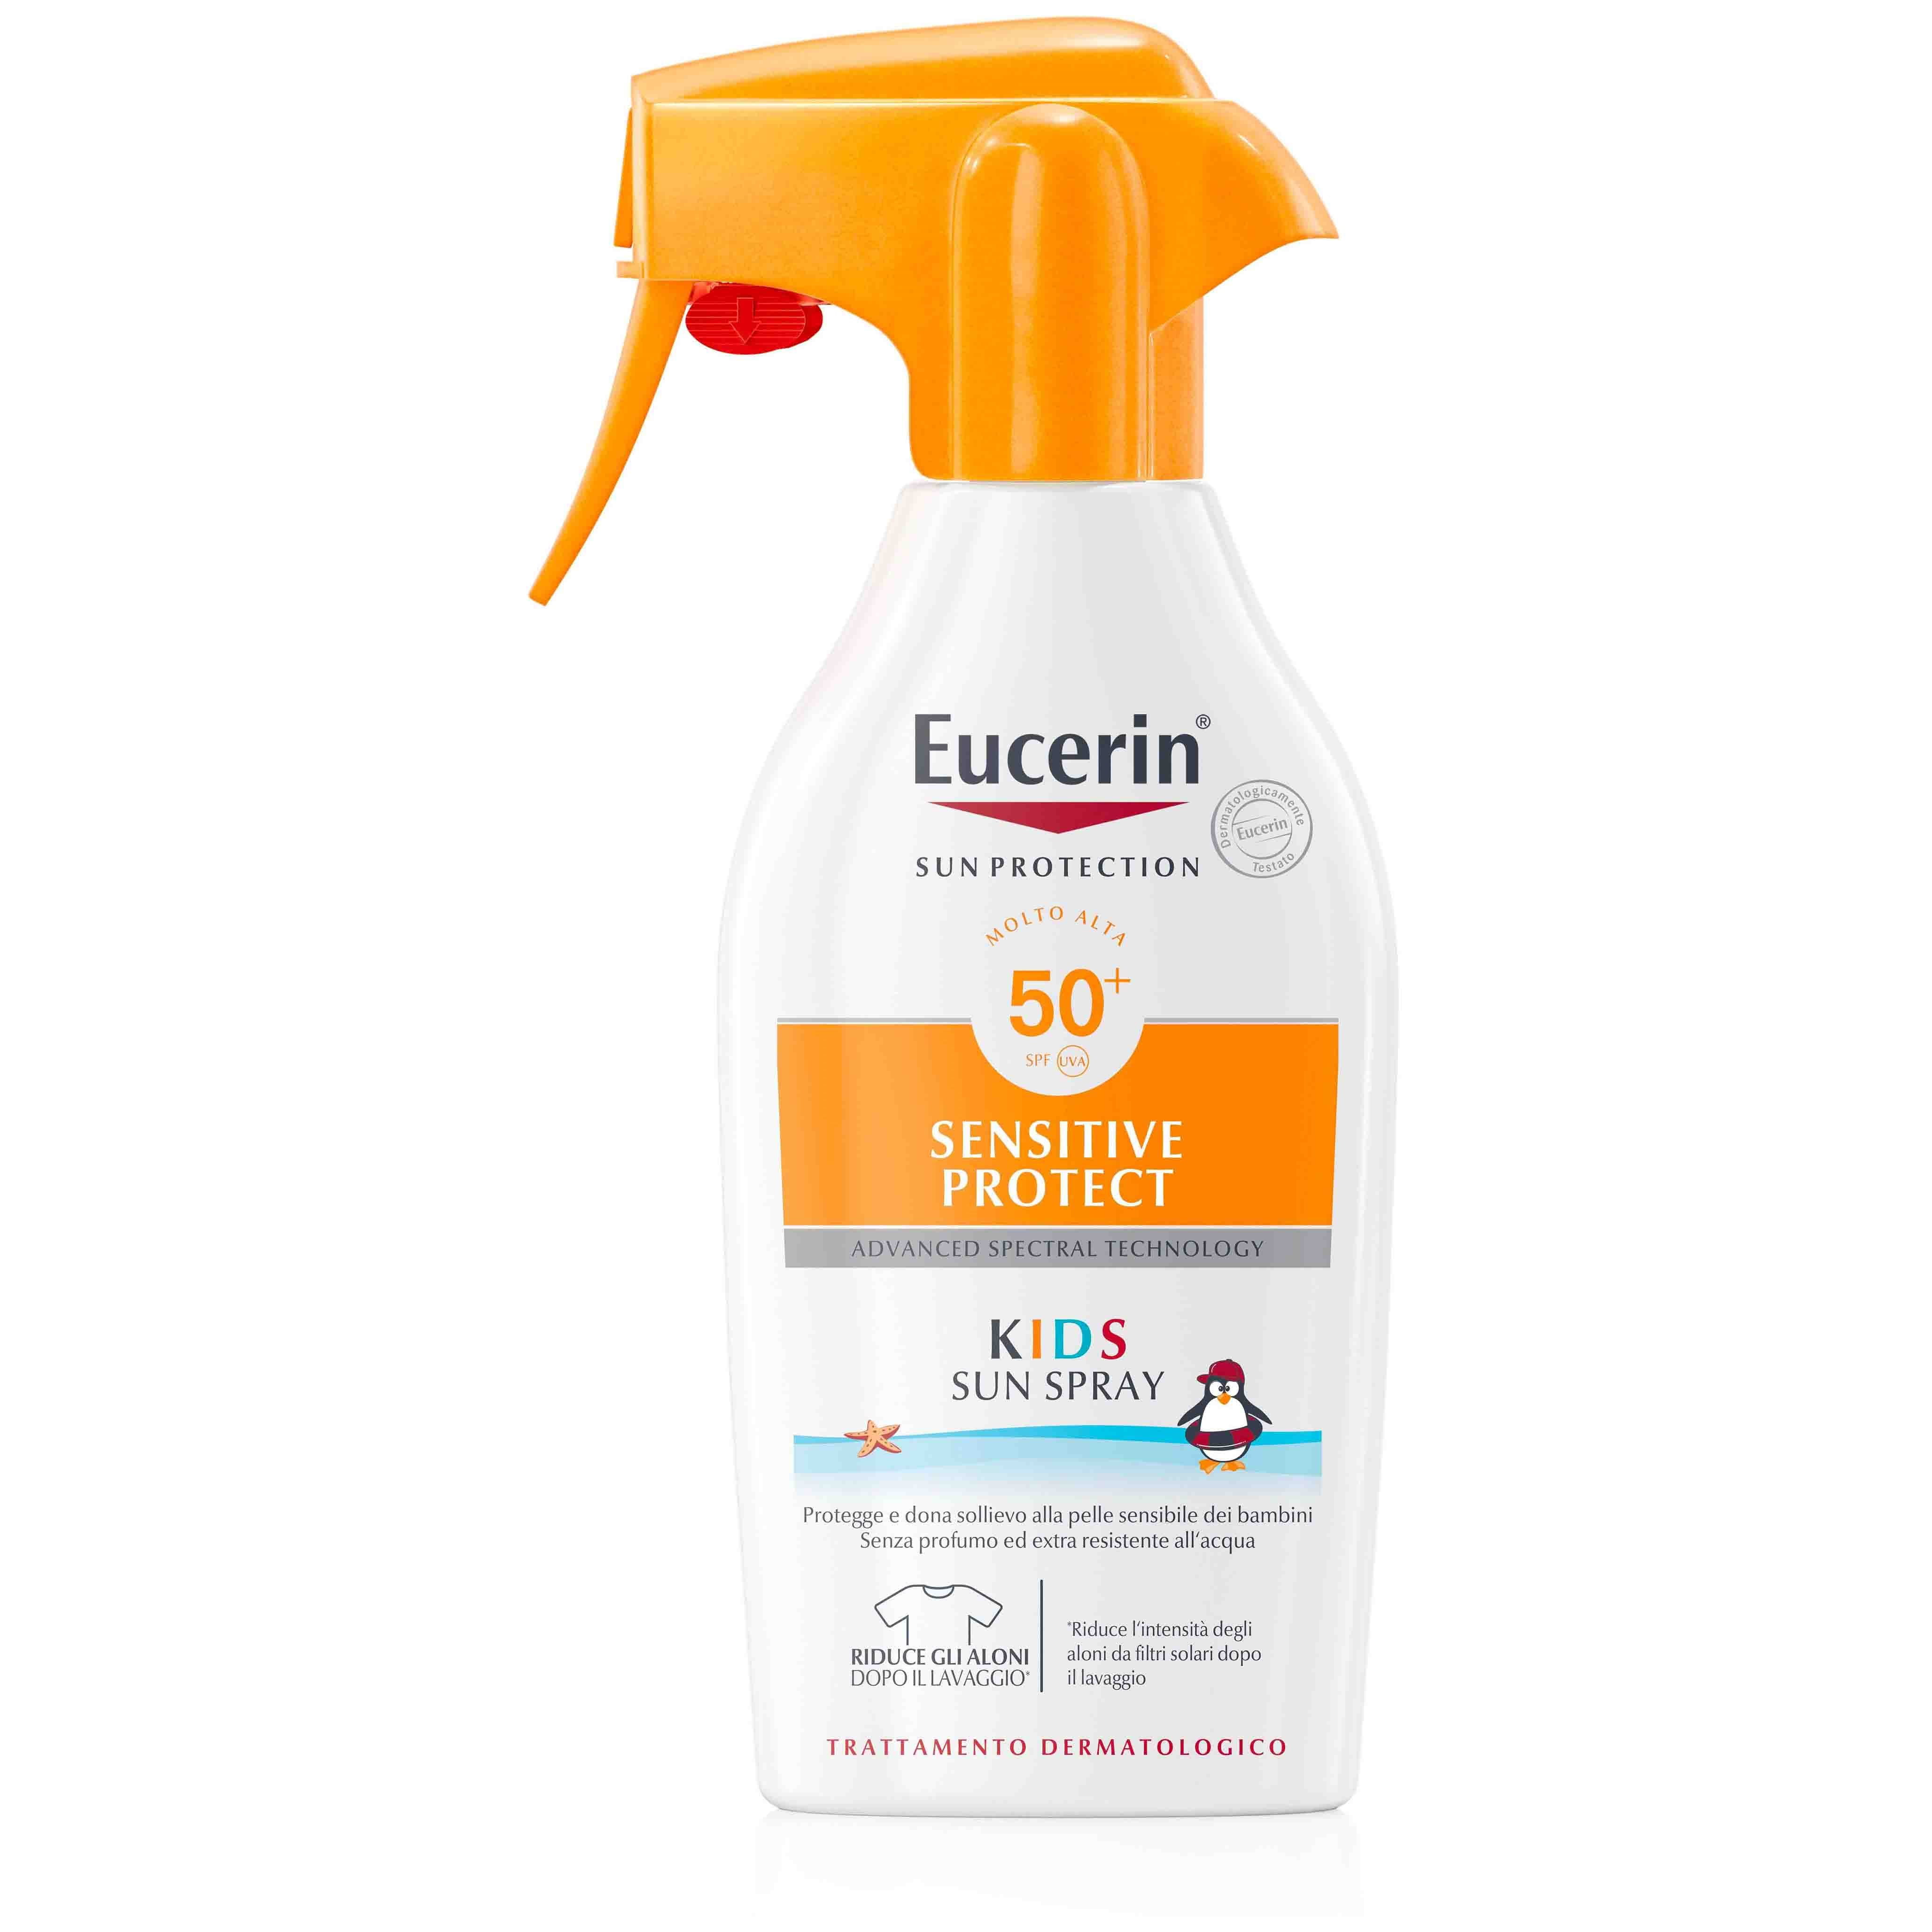 Eucerin Kids Trigger Sun Spray Sensitive Protect SPF 50+